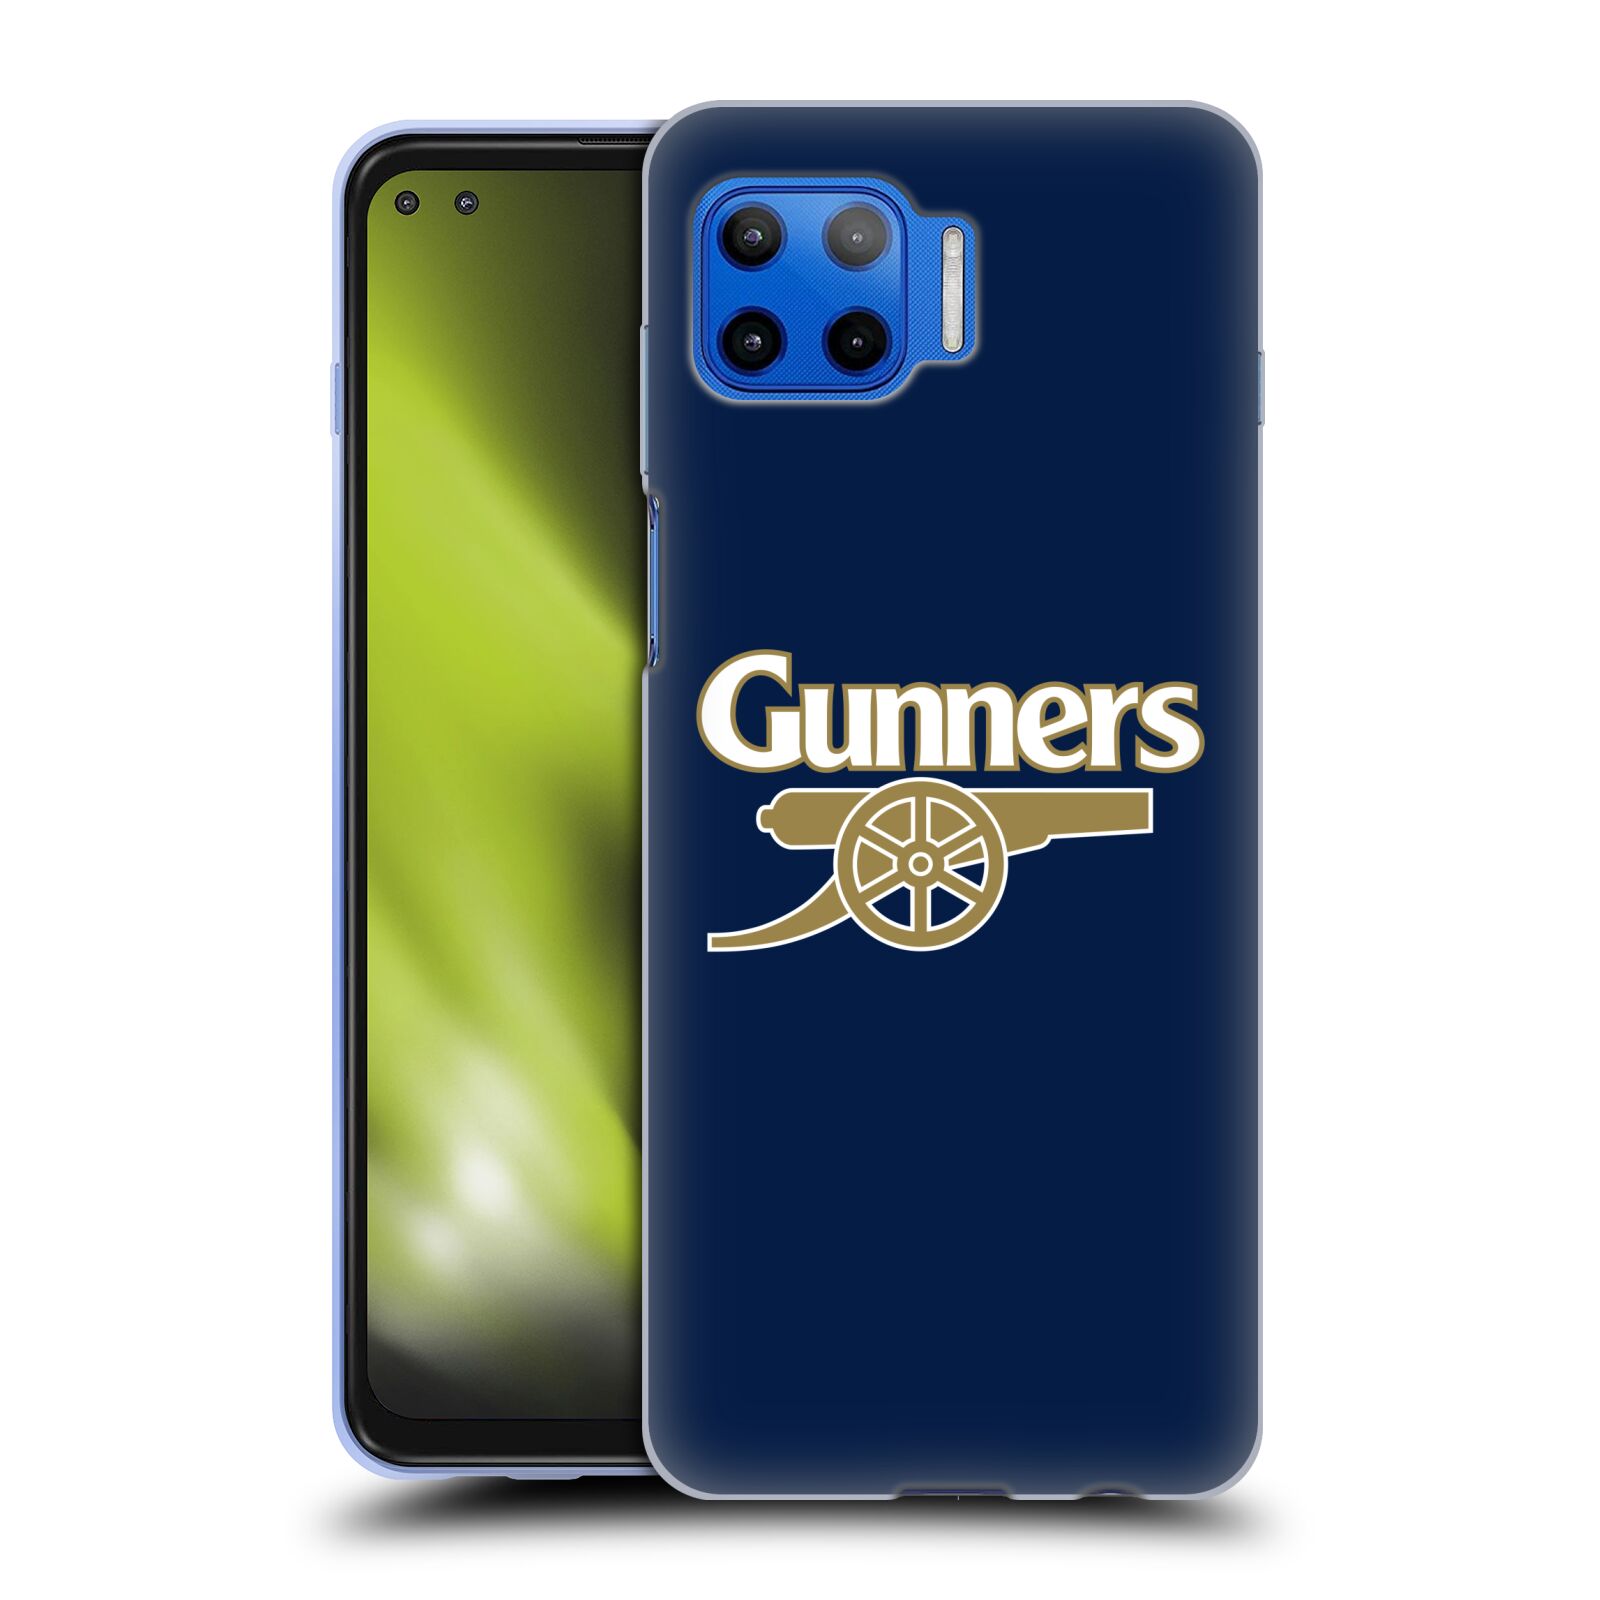 Silikonové pouzdro na mobil Motorola Moto G 5G Plus - Head Case - Arsenal FC - Gunners